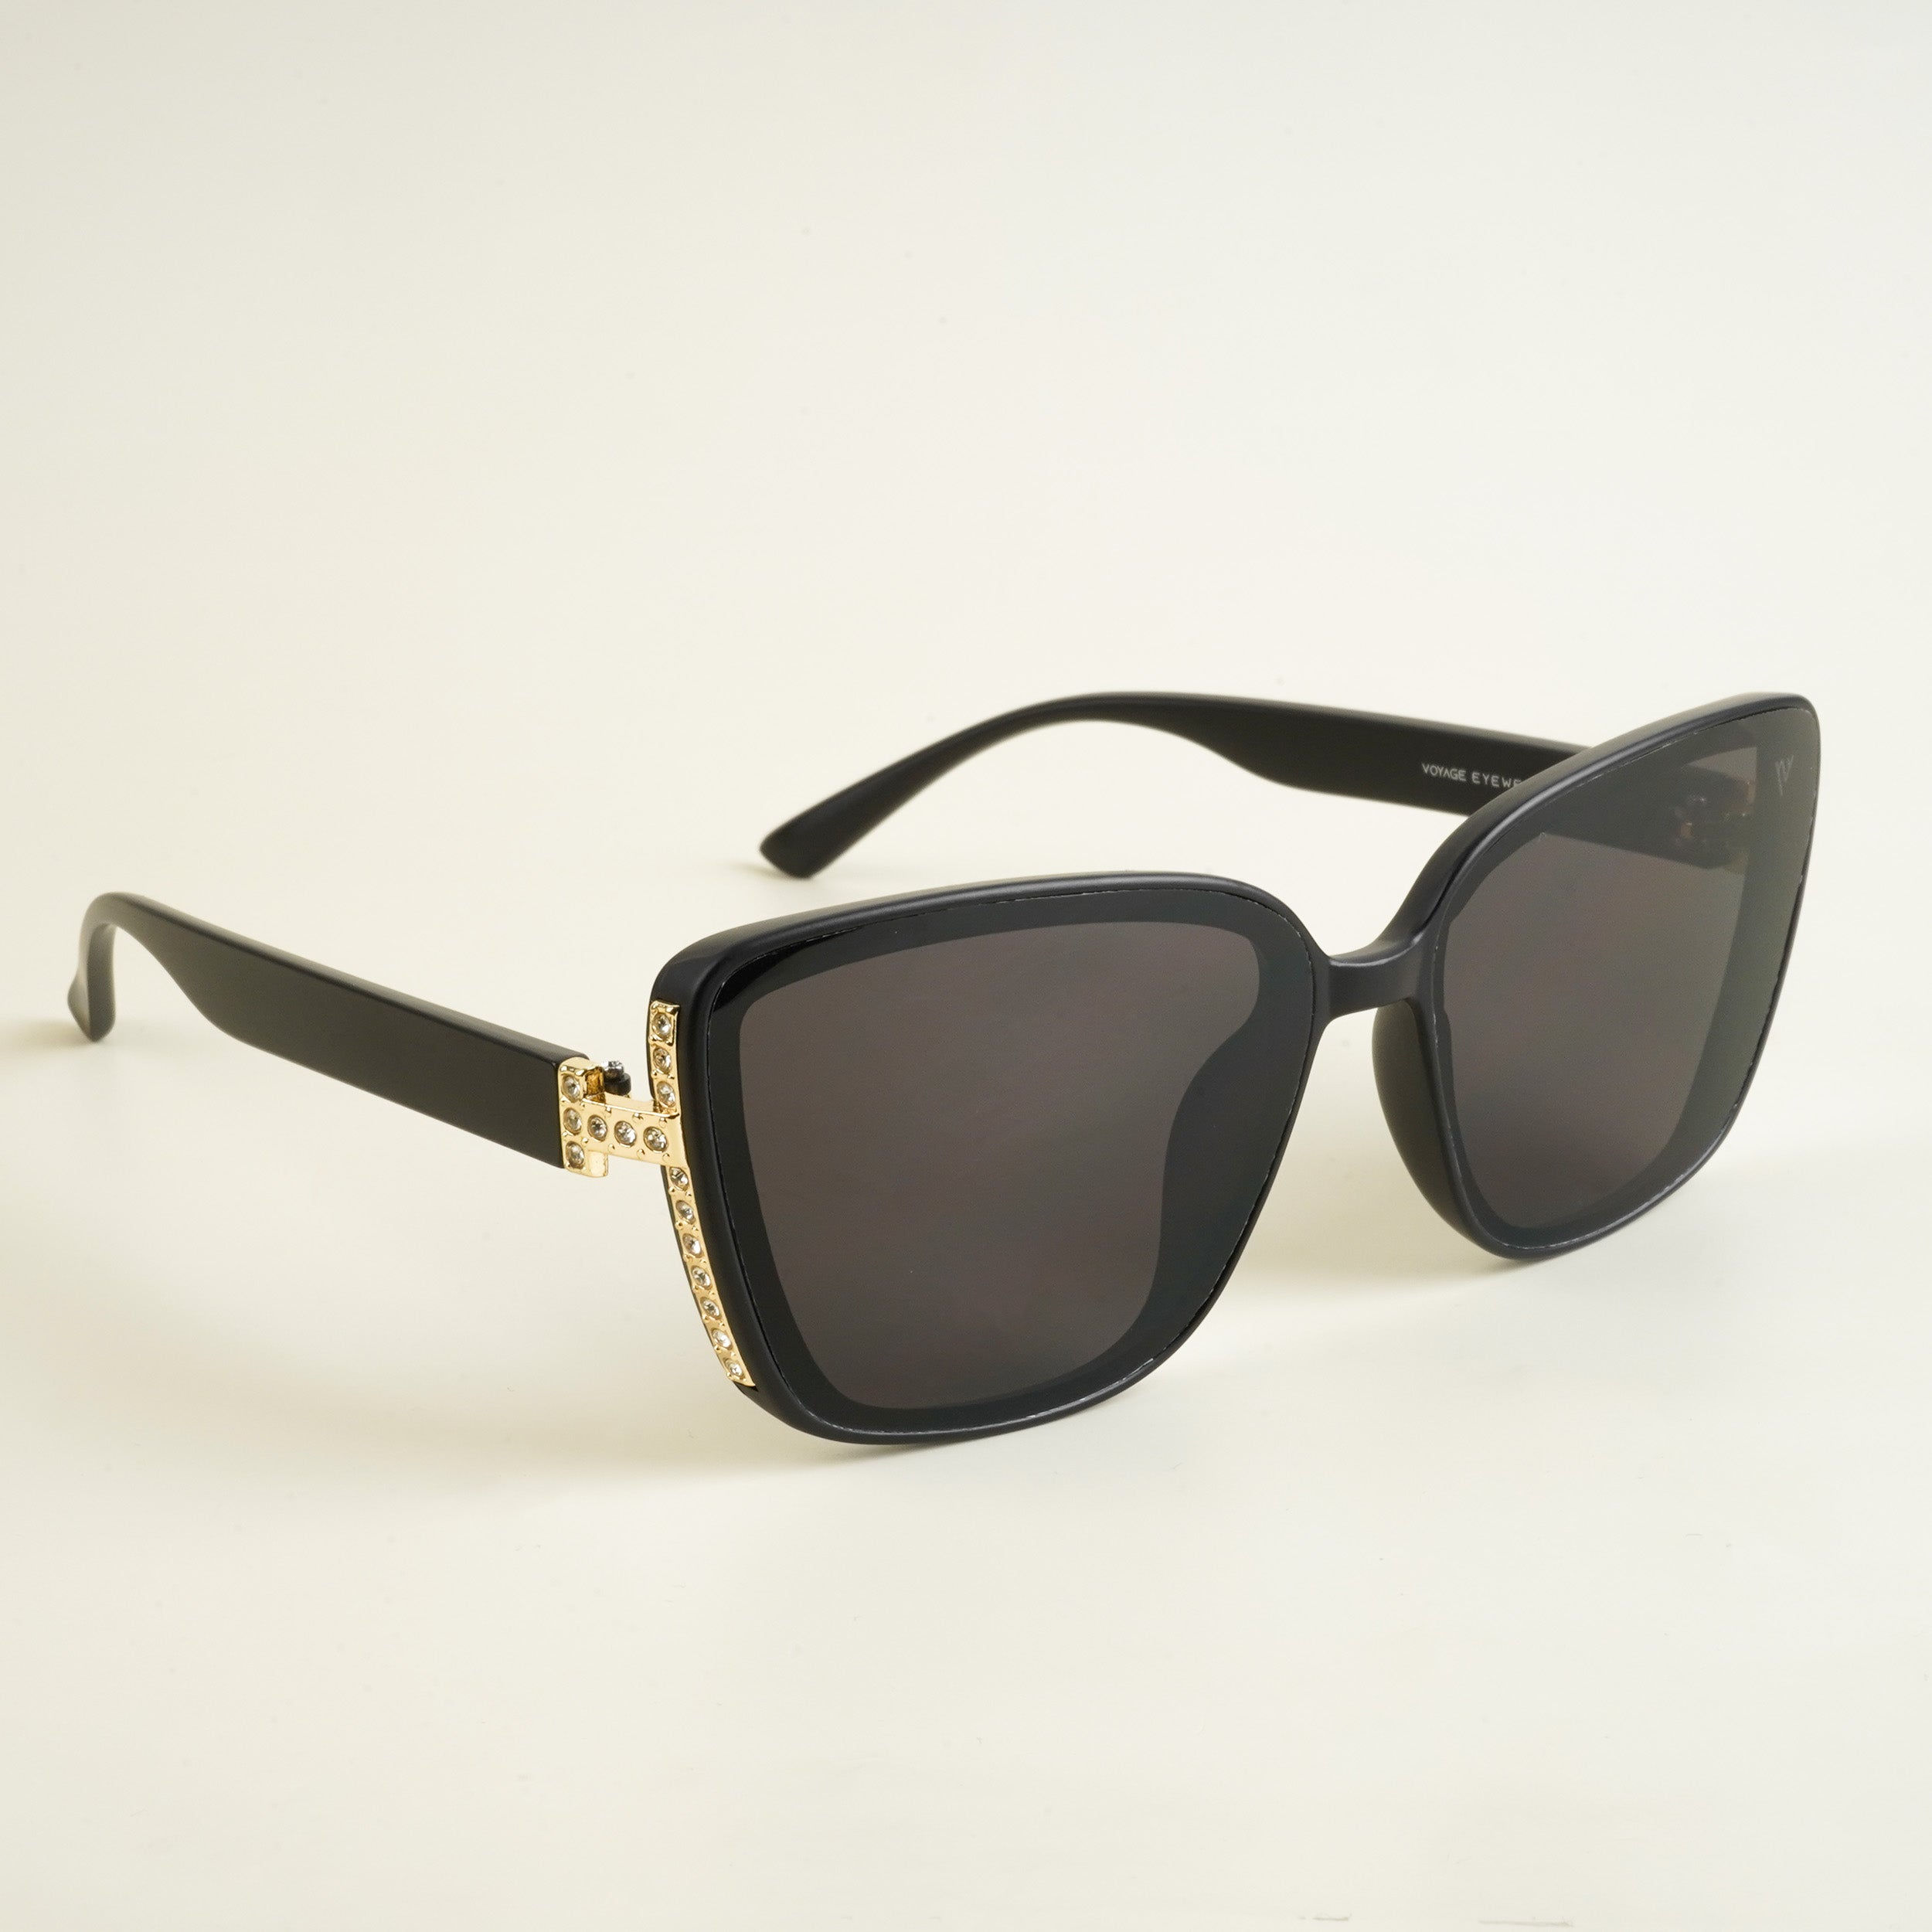 Voyage Matt Black Cateye Sunglasses for Women - MG4926